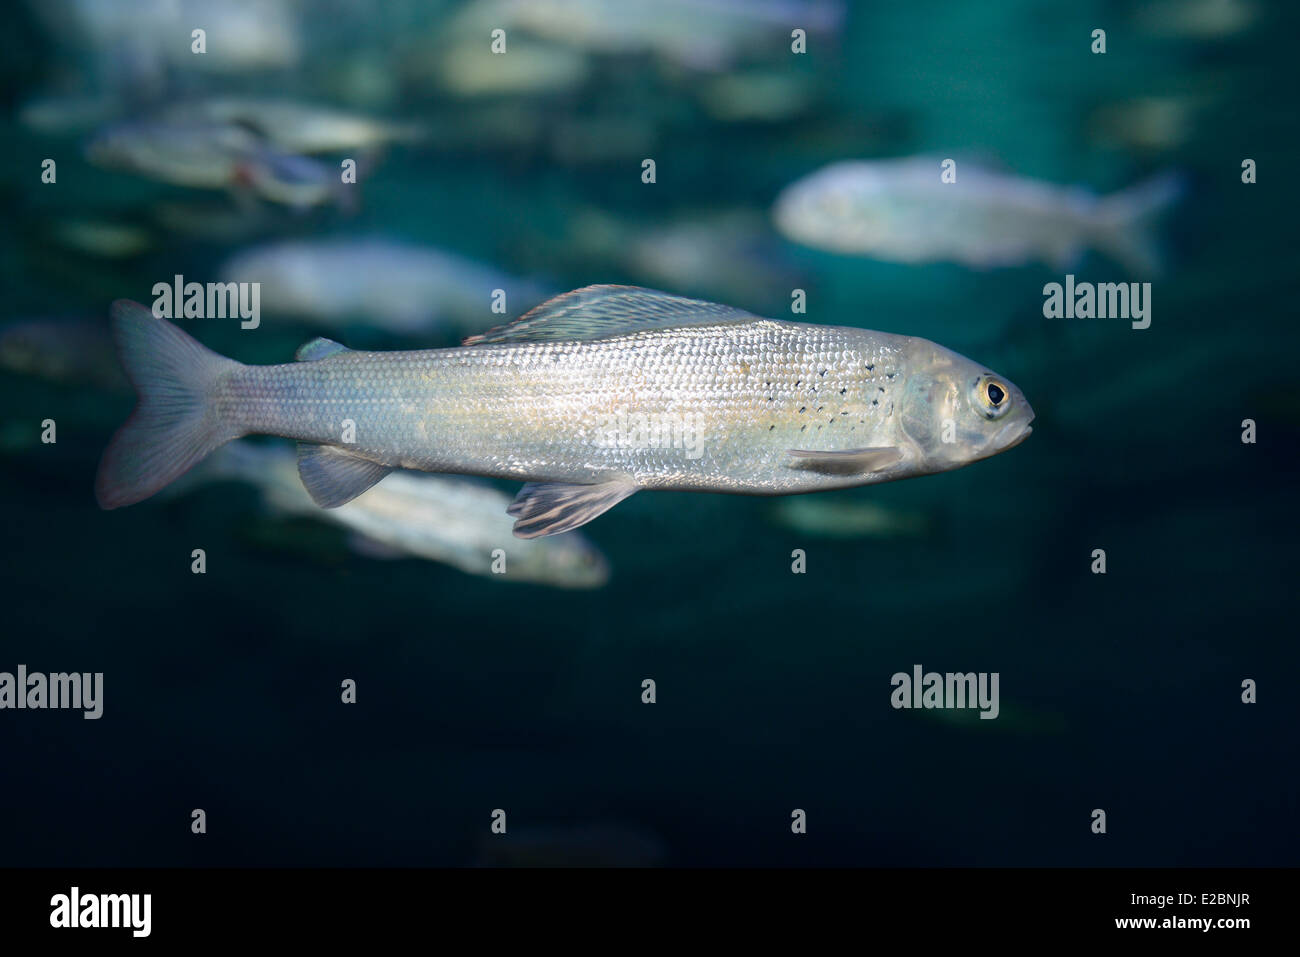 Arctic Grayling cold freshwater fish swimming underwater in Ripleys Aquarium Toronto Stock Photo